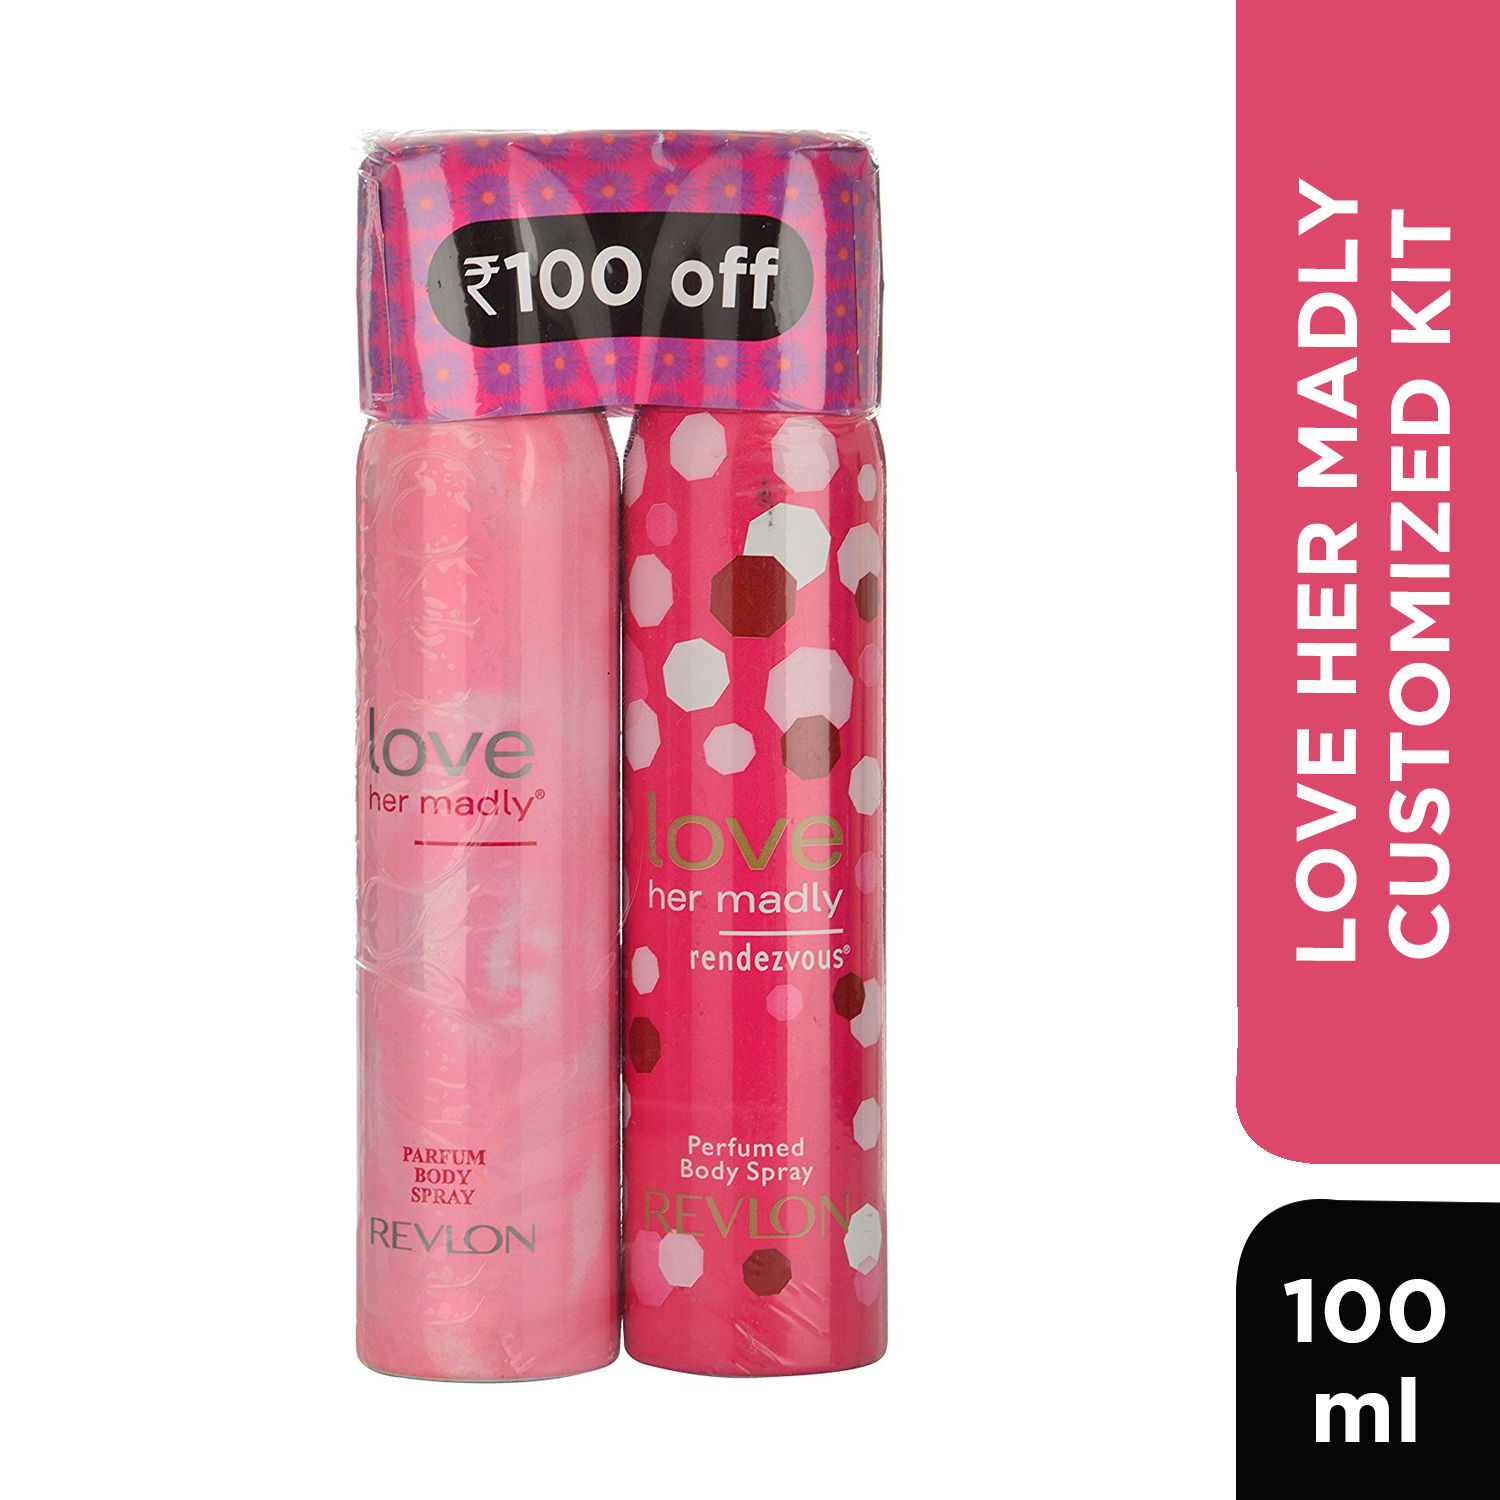 Revlon Love Her Madly Rendezvous Perfumed Body Spray + Perfumed Body Spray (Rs.100 Off)